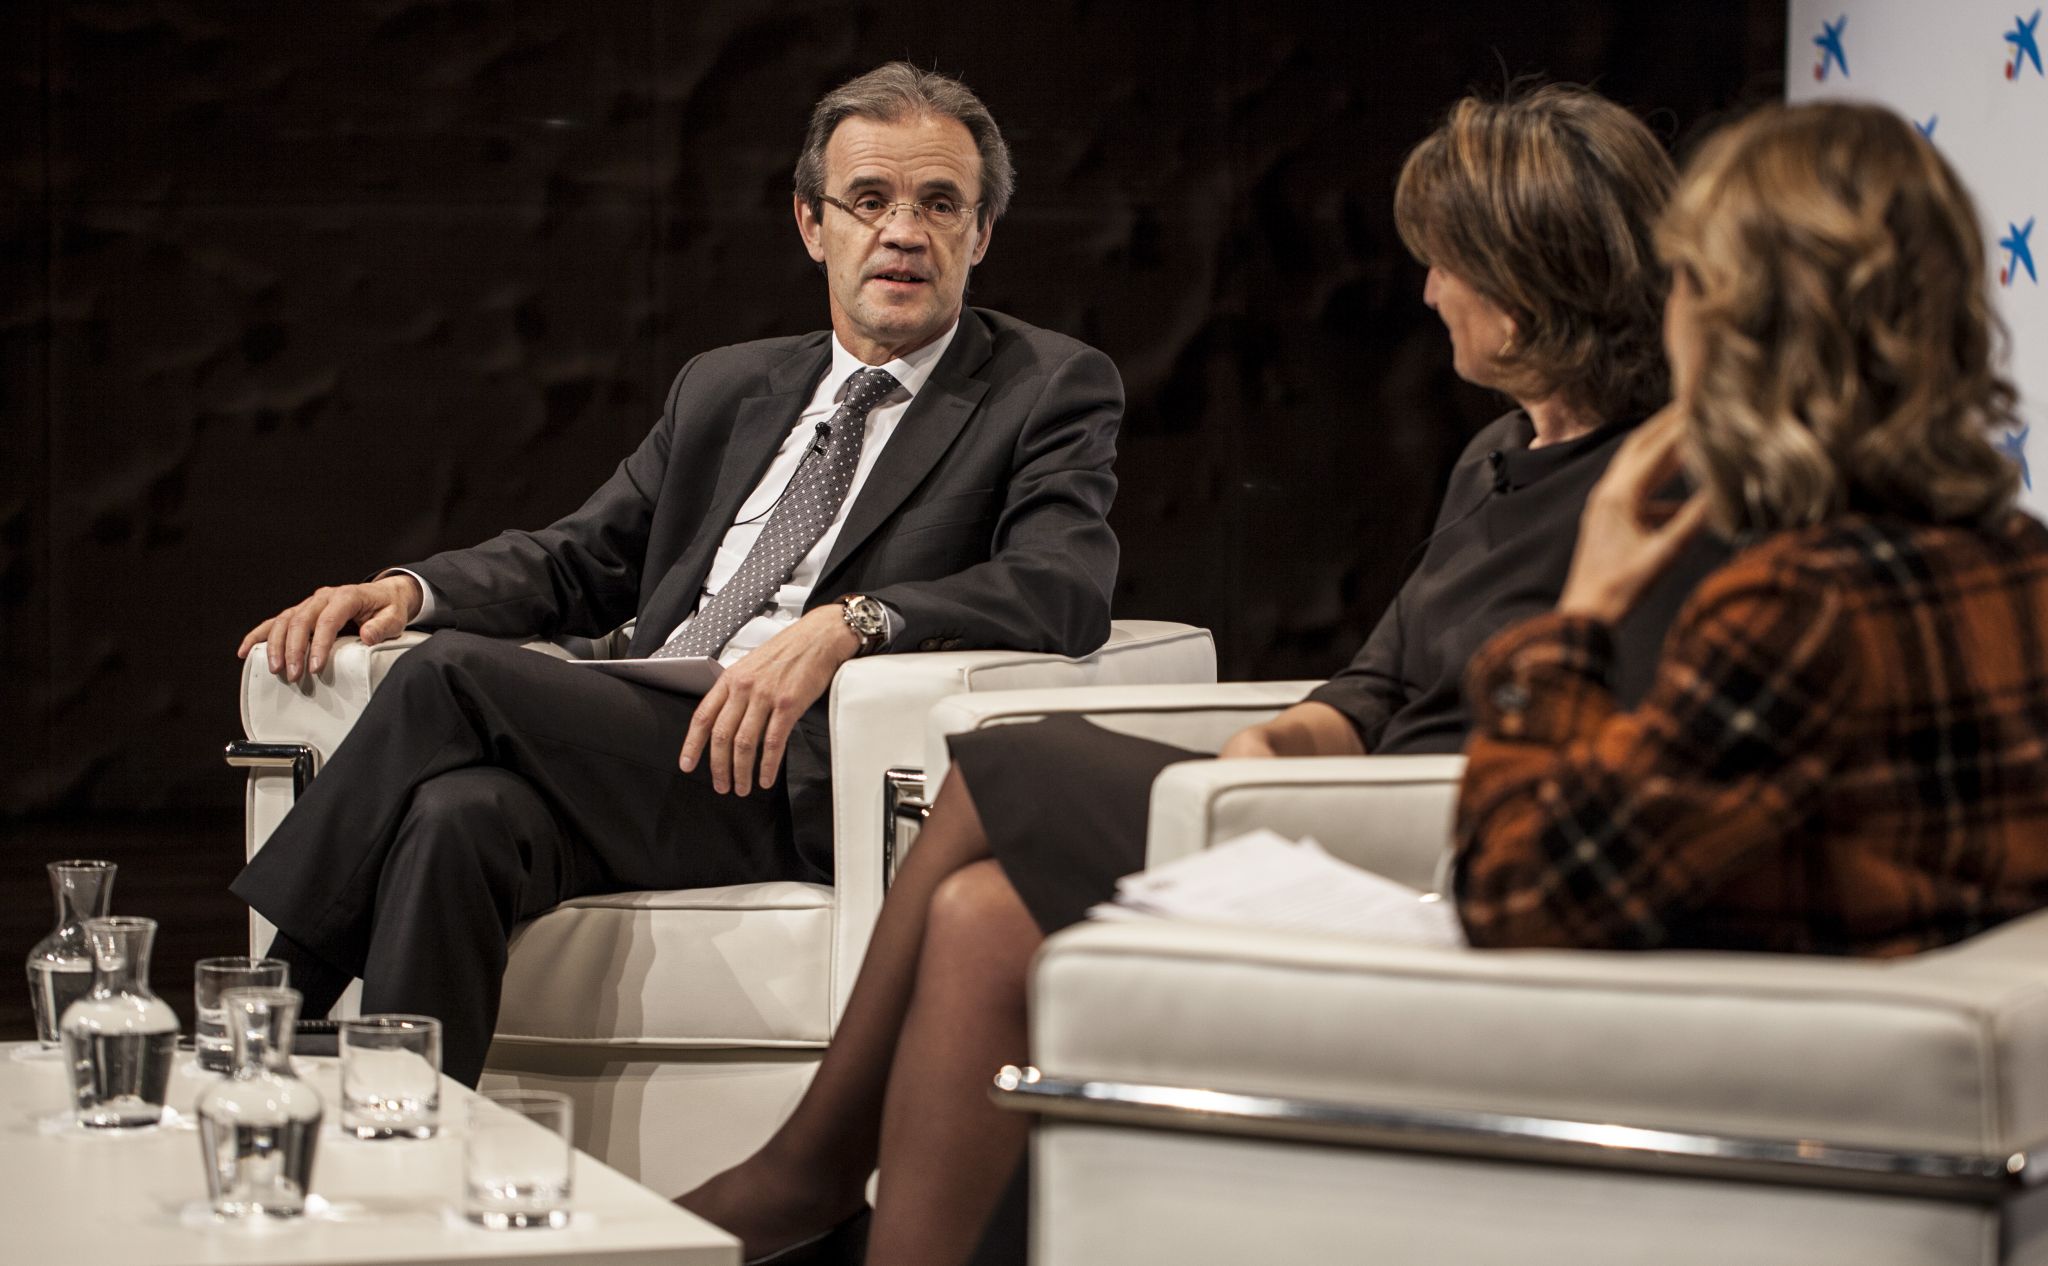  Jordi Gual, Presidente de CaixaBank, Teresa Ribera, Ministra para la Transición Ecológica, y Cristina Garmenda, Presidenta de COTEC